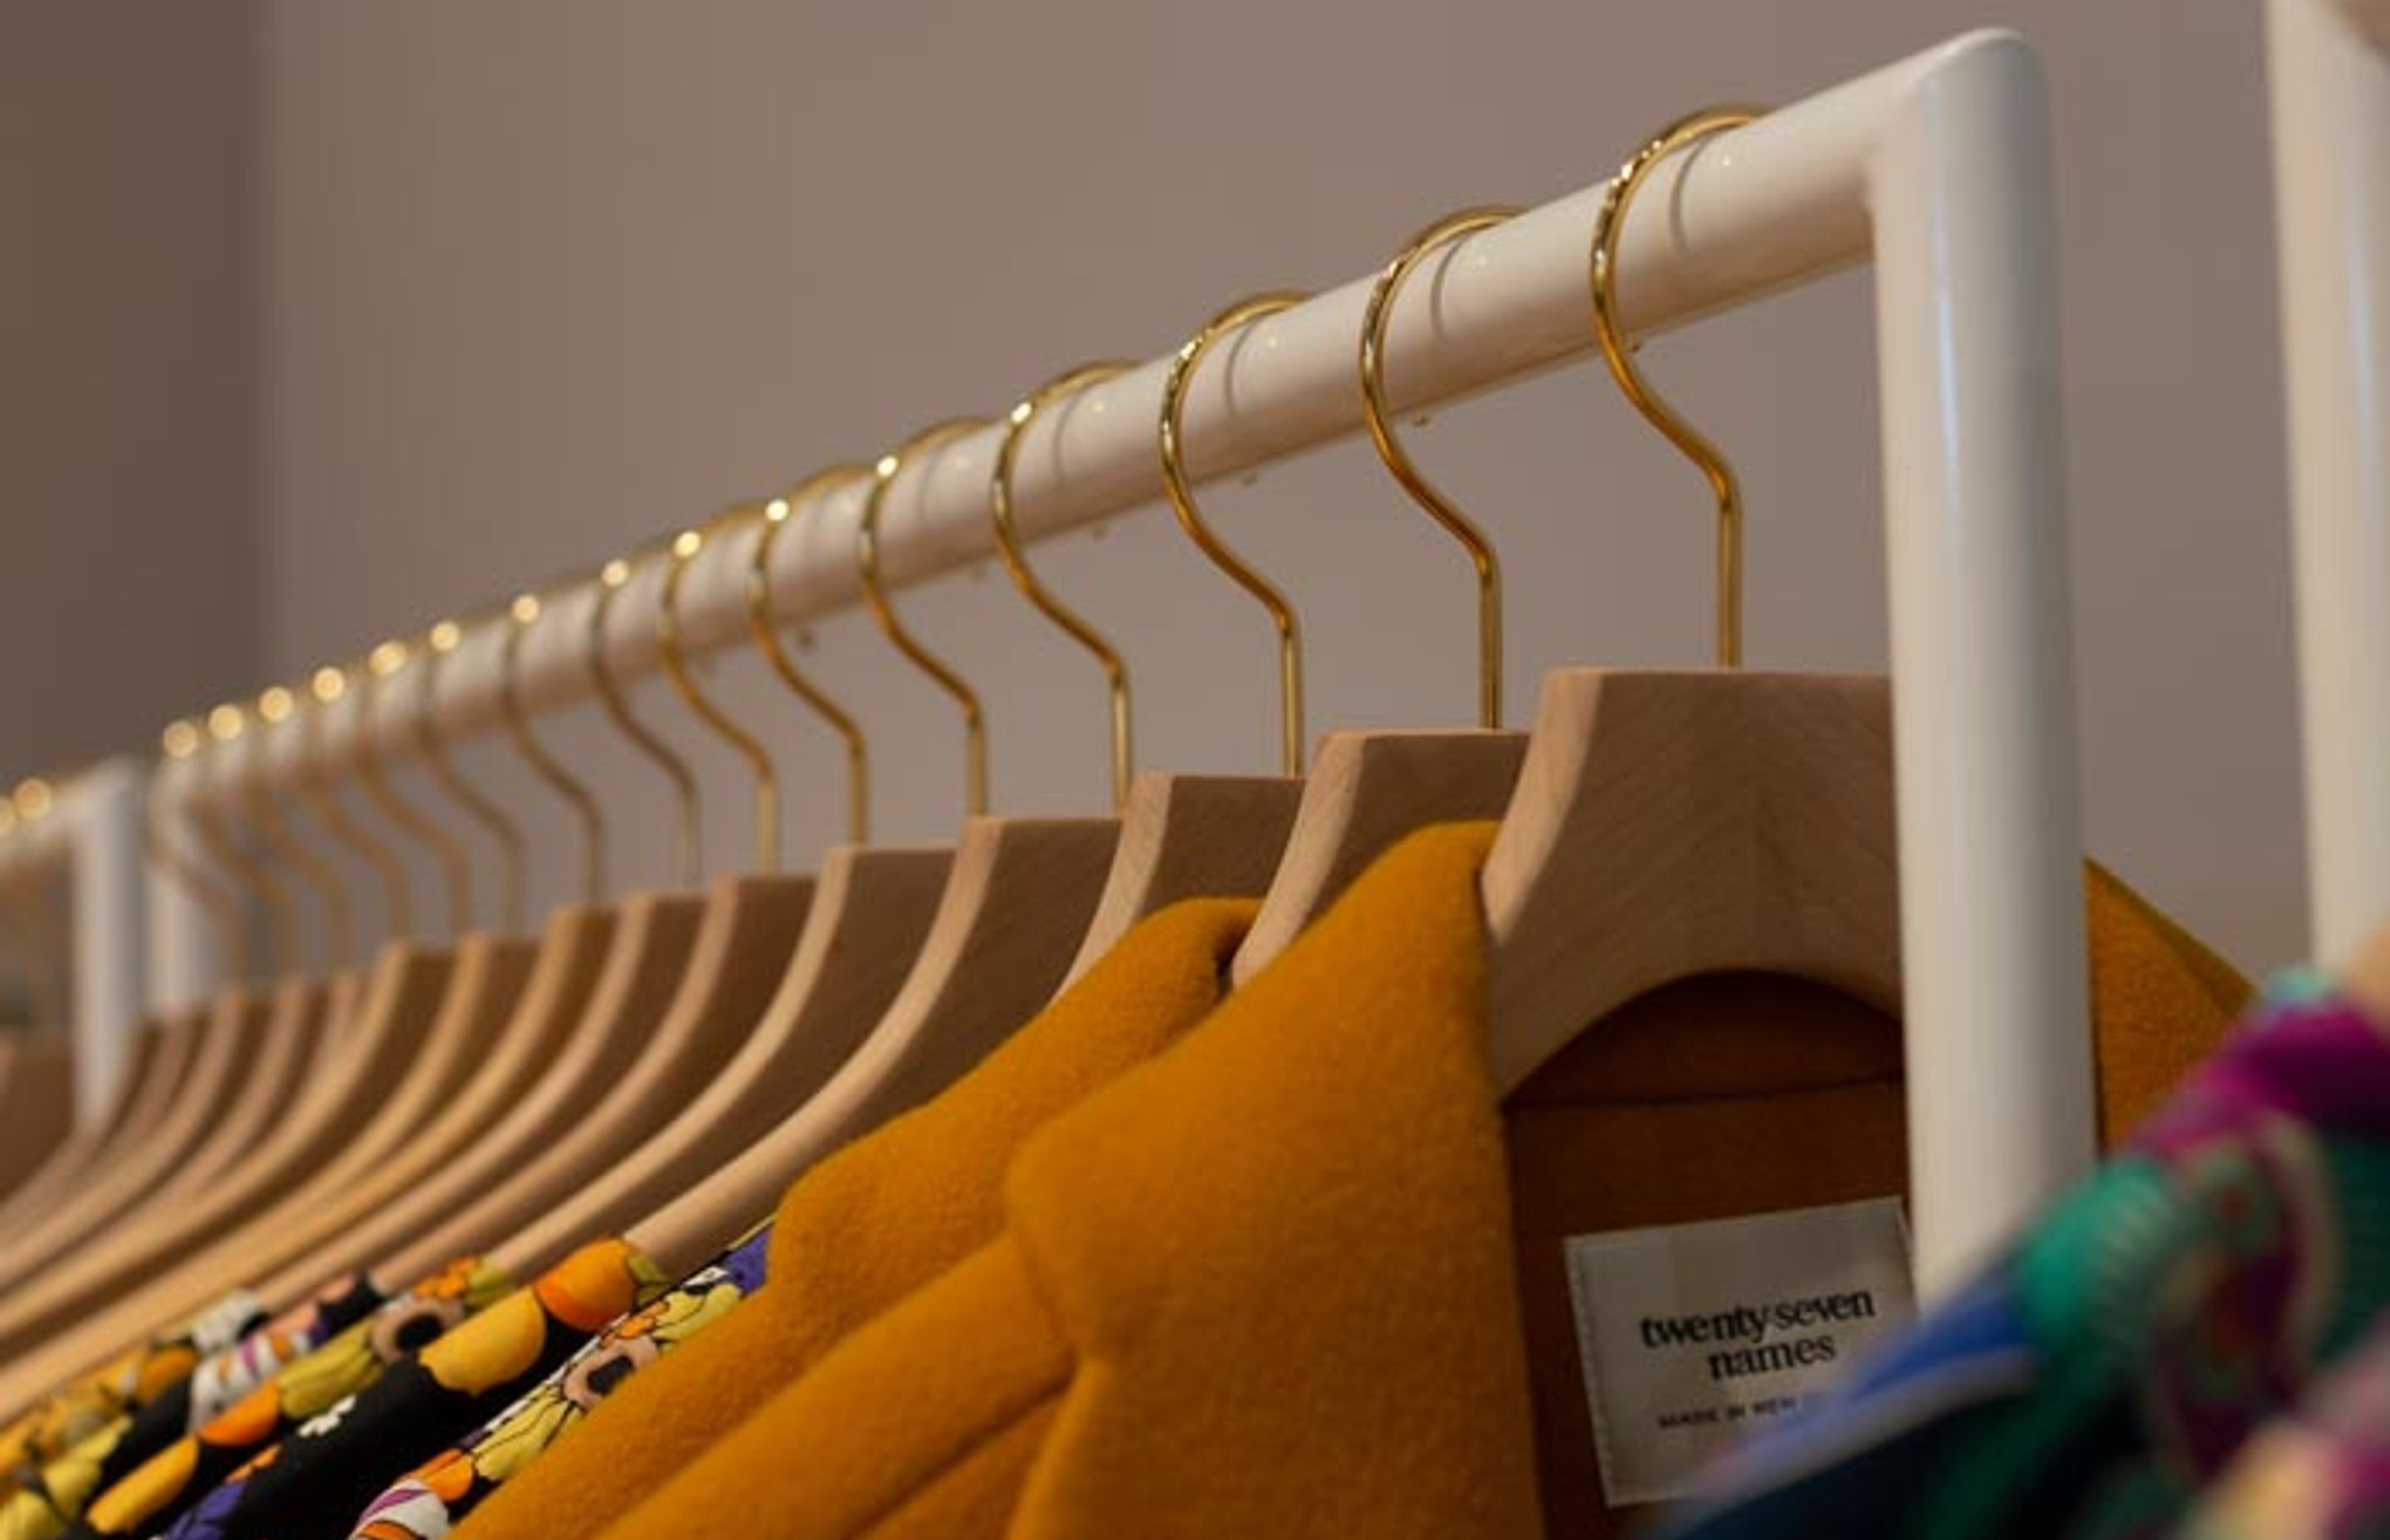 twenty-seven names - retail clothing racks